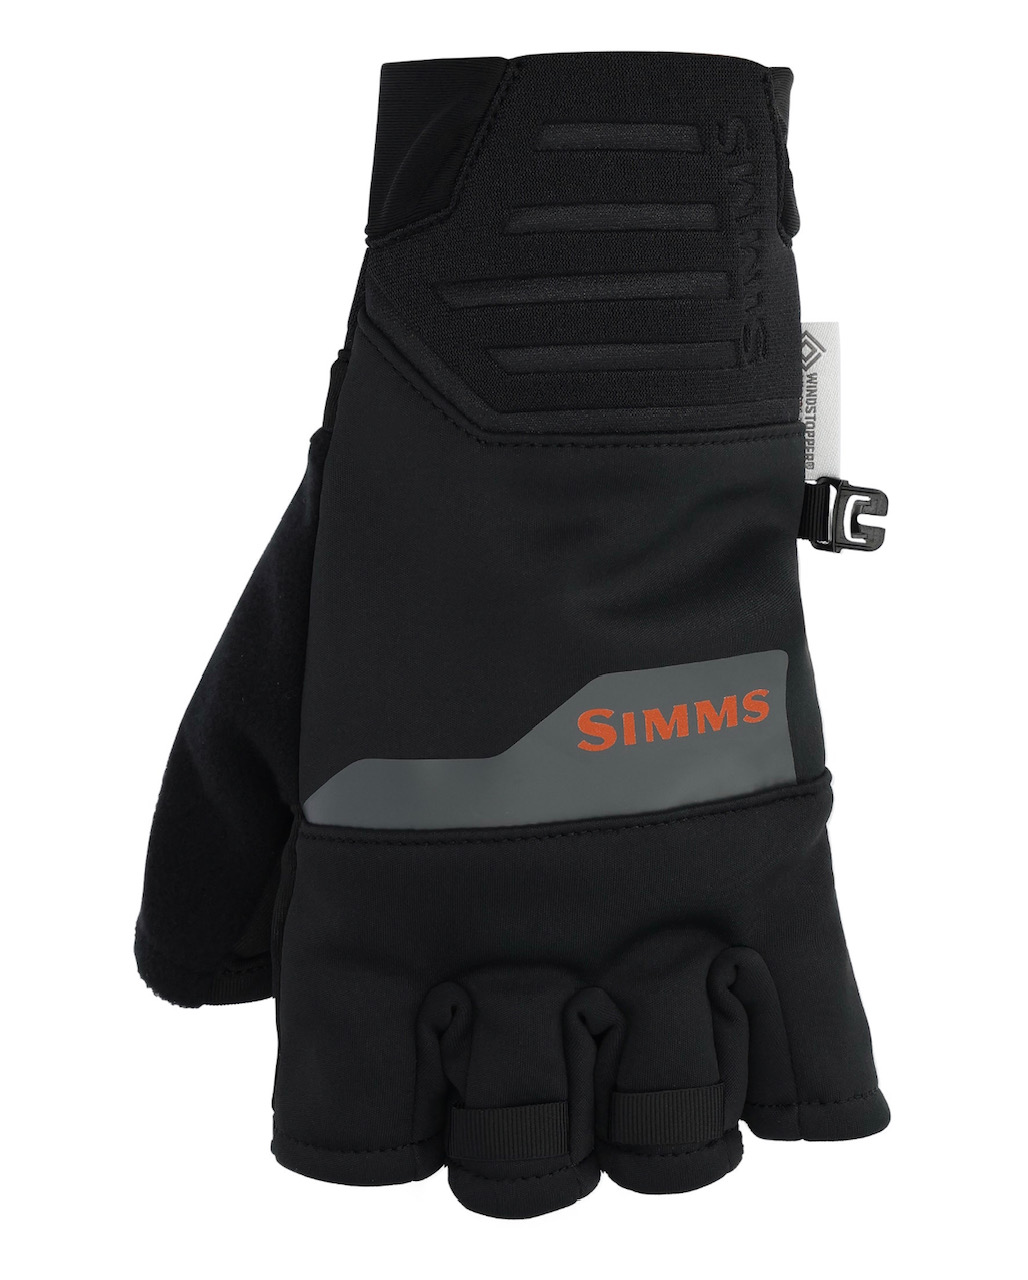 Simms WINDSTOPPER Half-Finger Glove - Black - Medium